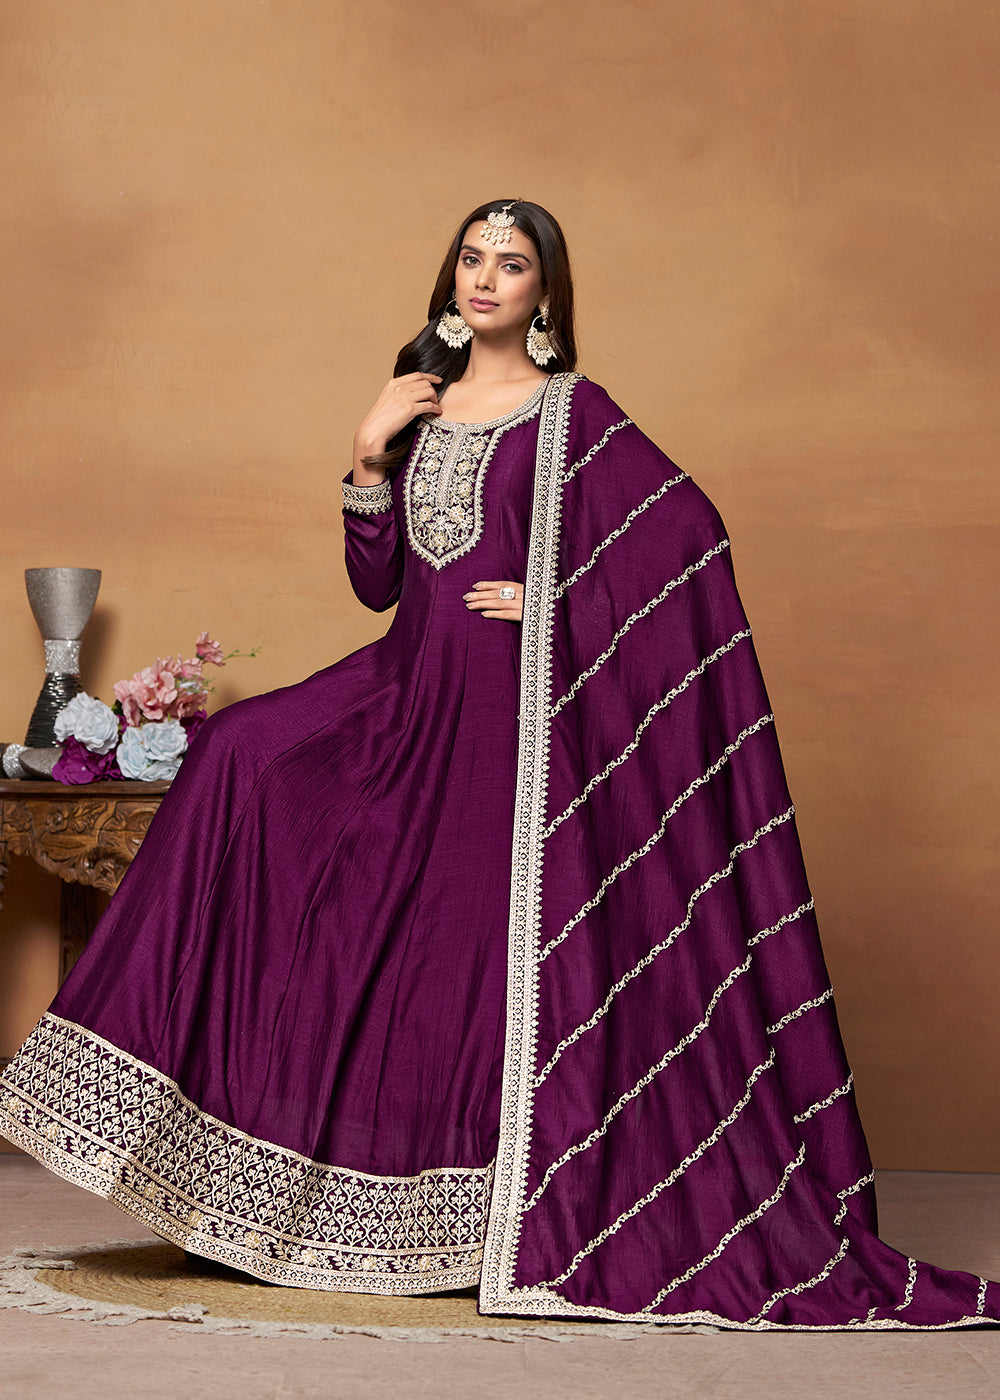 Buy Now Amazing Art Silk Purple Embroidered Festive Anarkali Suit Online in USA, UK, Australia, New Zealand, Canada & Worldwide at Empress Clothing.